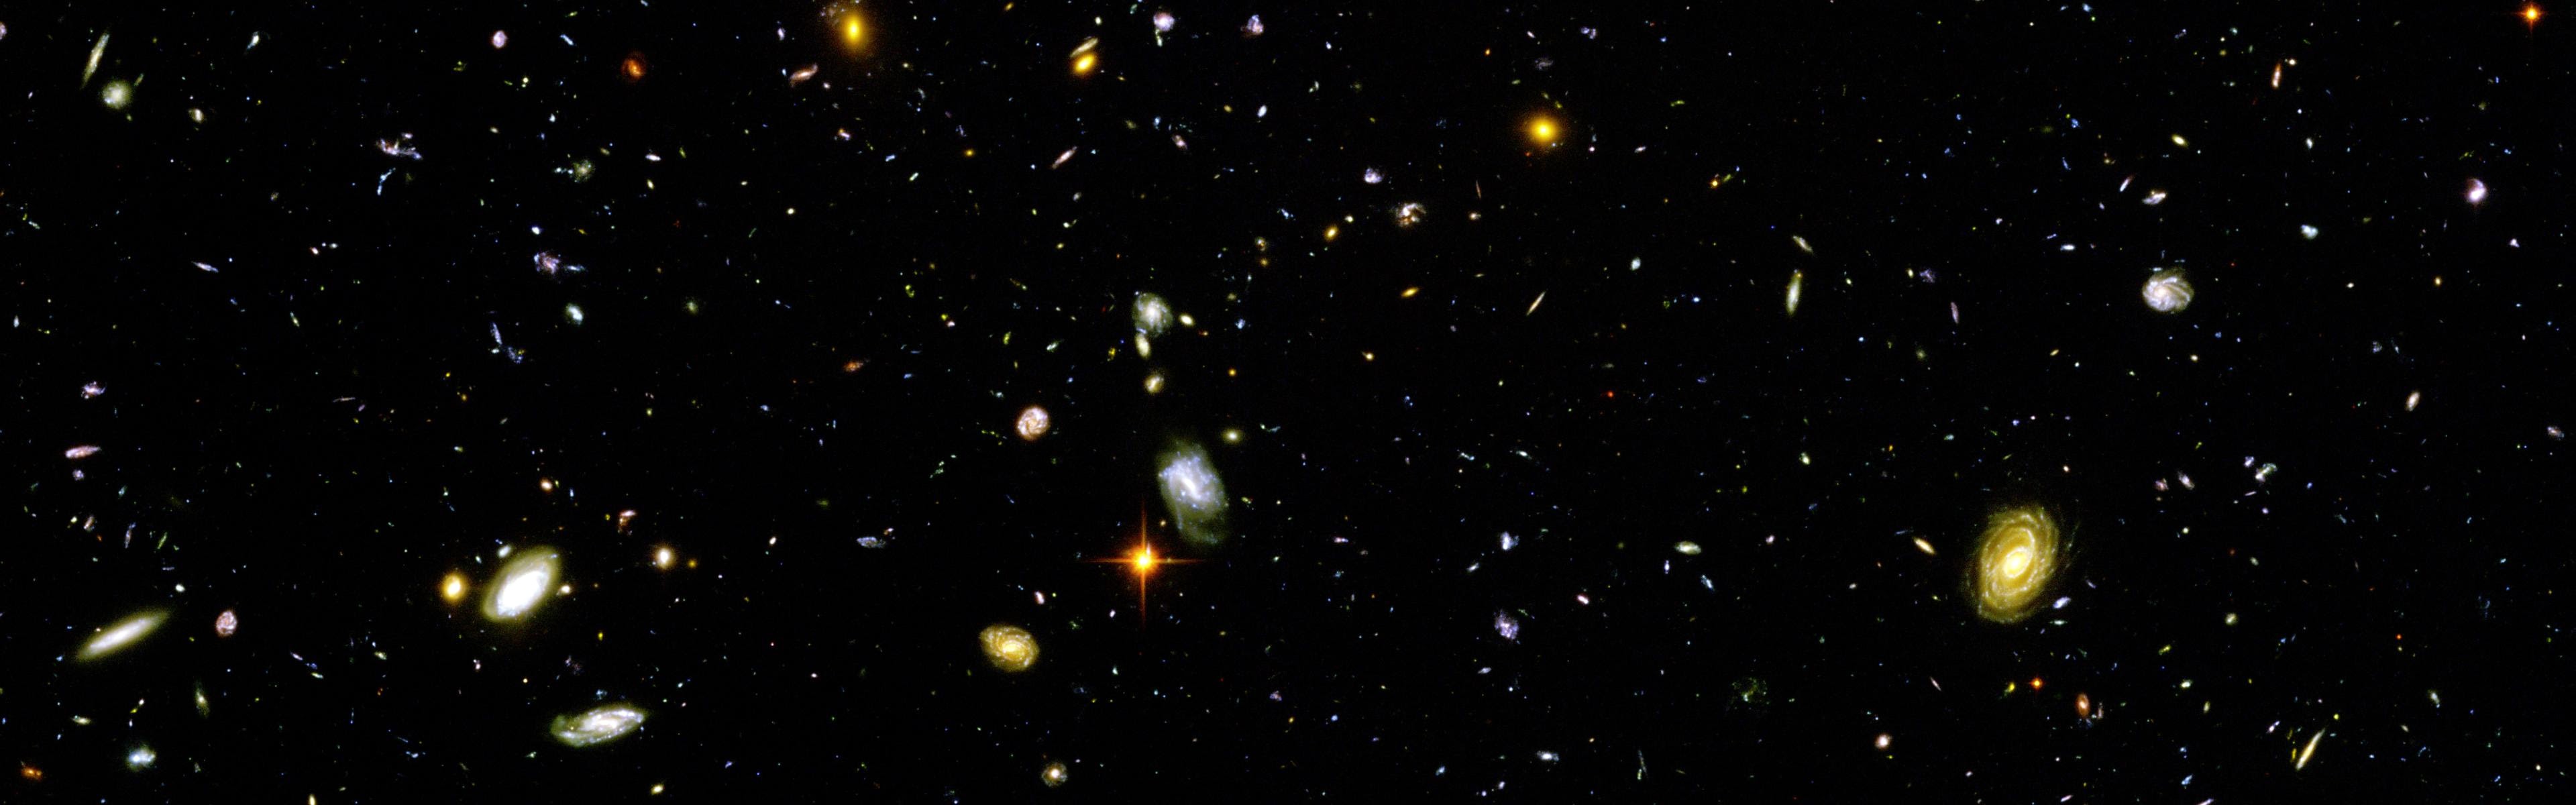 Hubble Deep Field Space Galaxy Multiple Display Dual Monitors 3840x1200